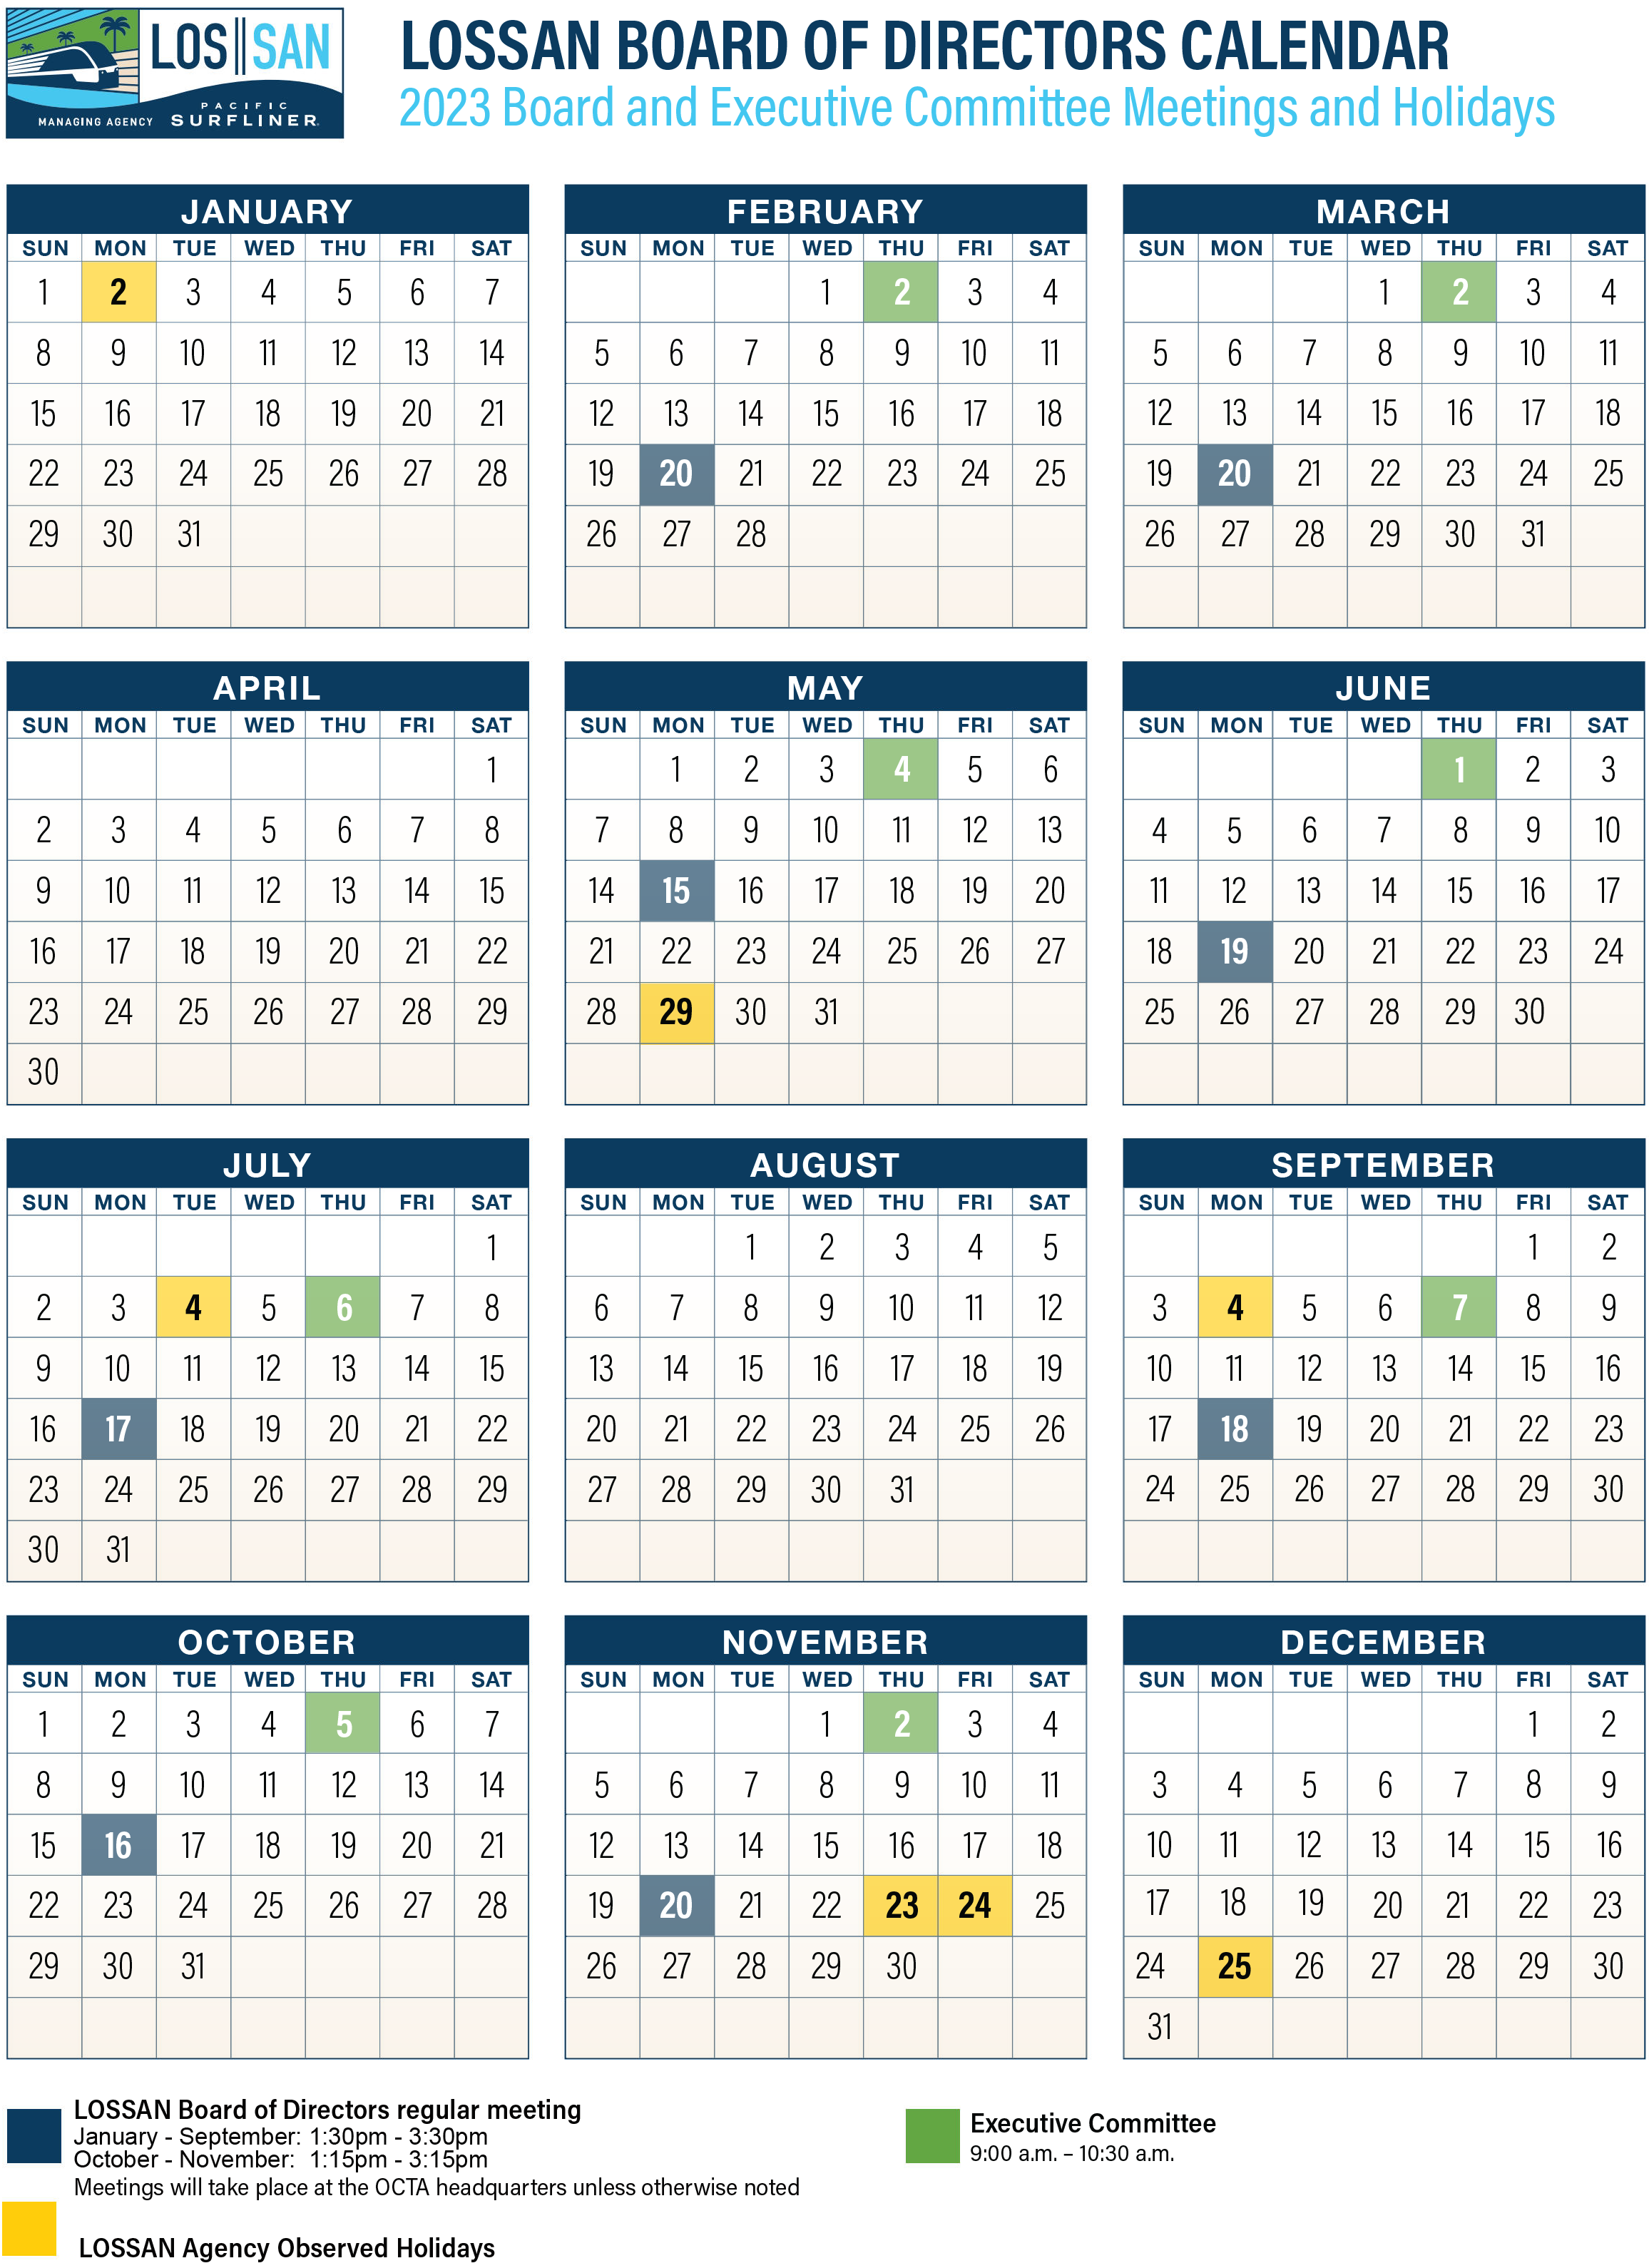 LOSSAN 2023 Board Calendar